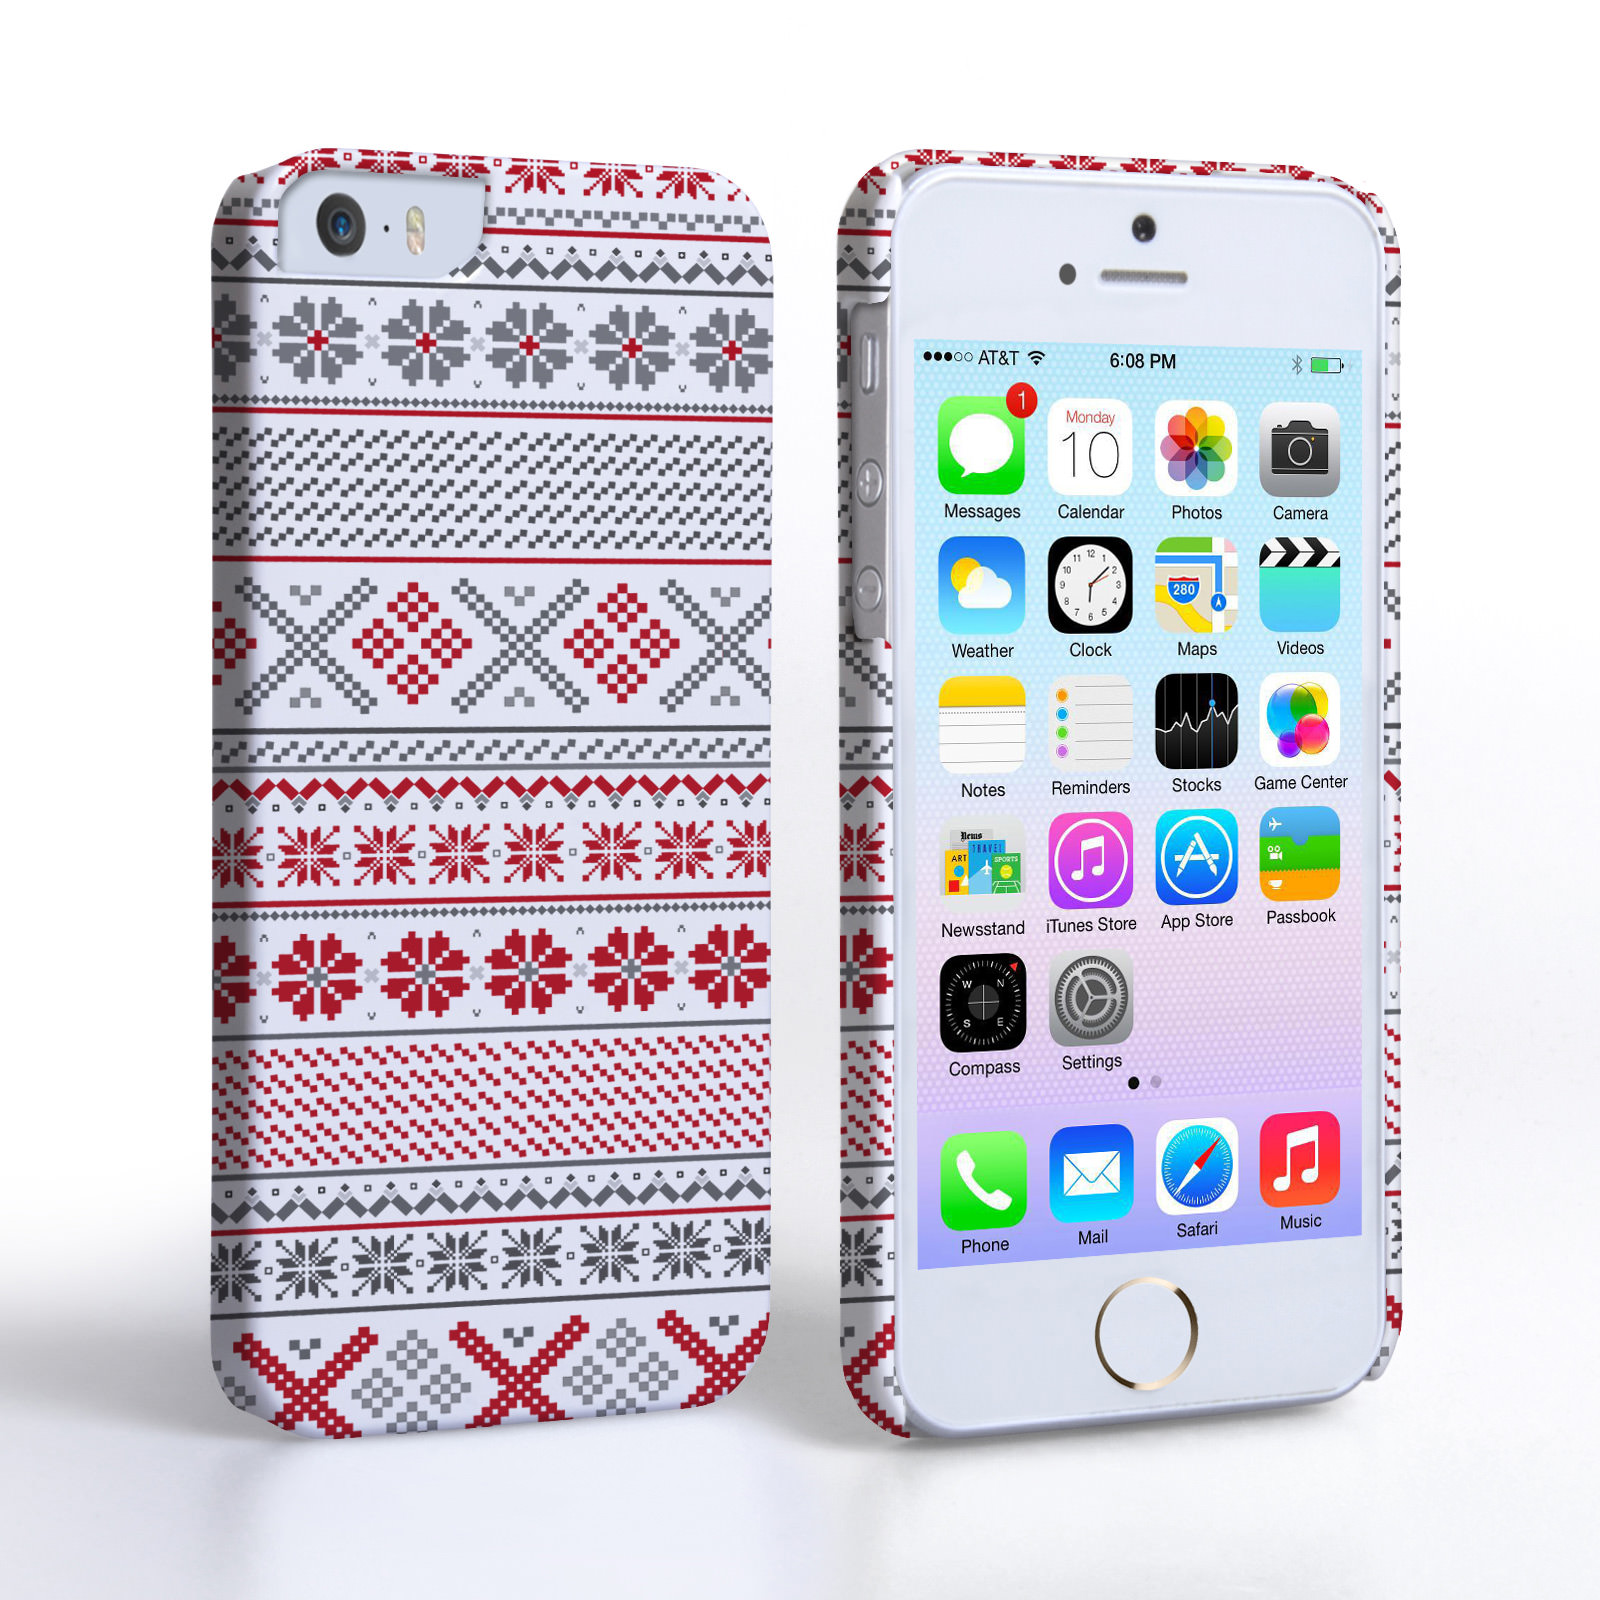 Caseflex iPhone 5/5S Fairisle Case – Red, White and Grey